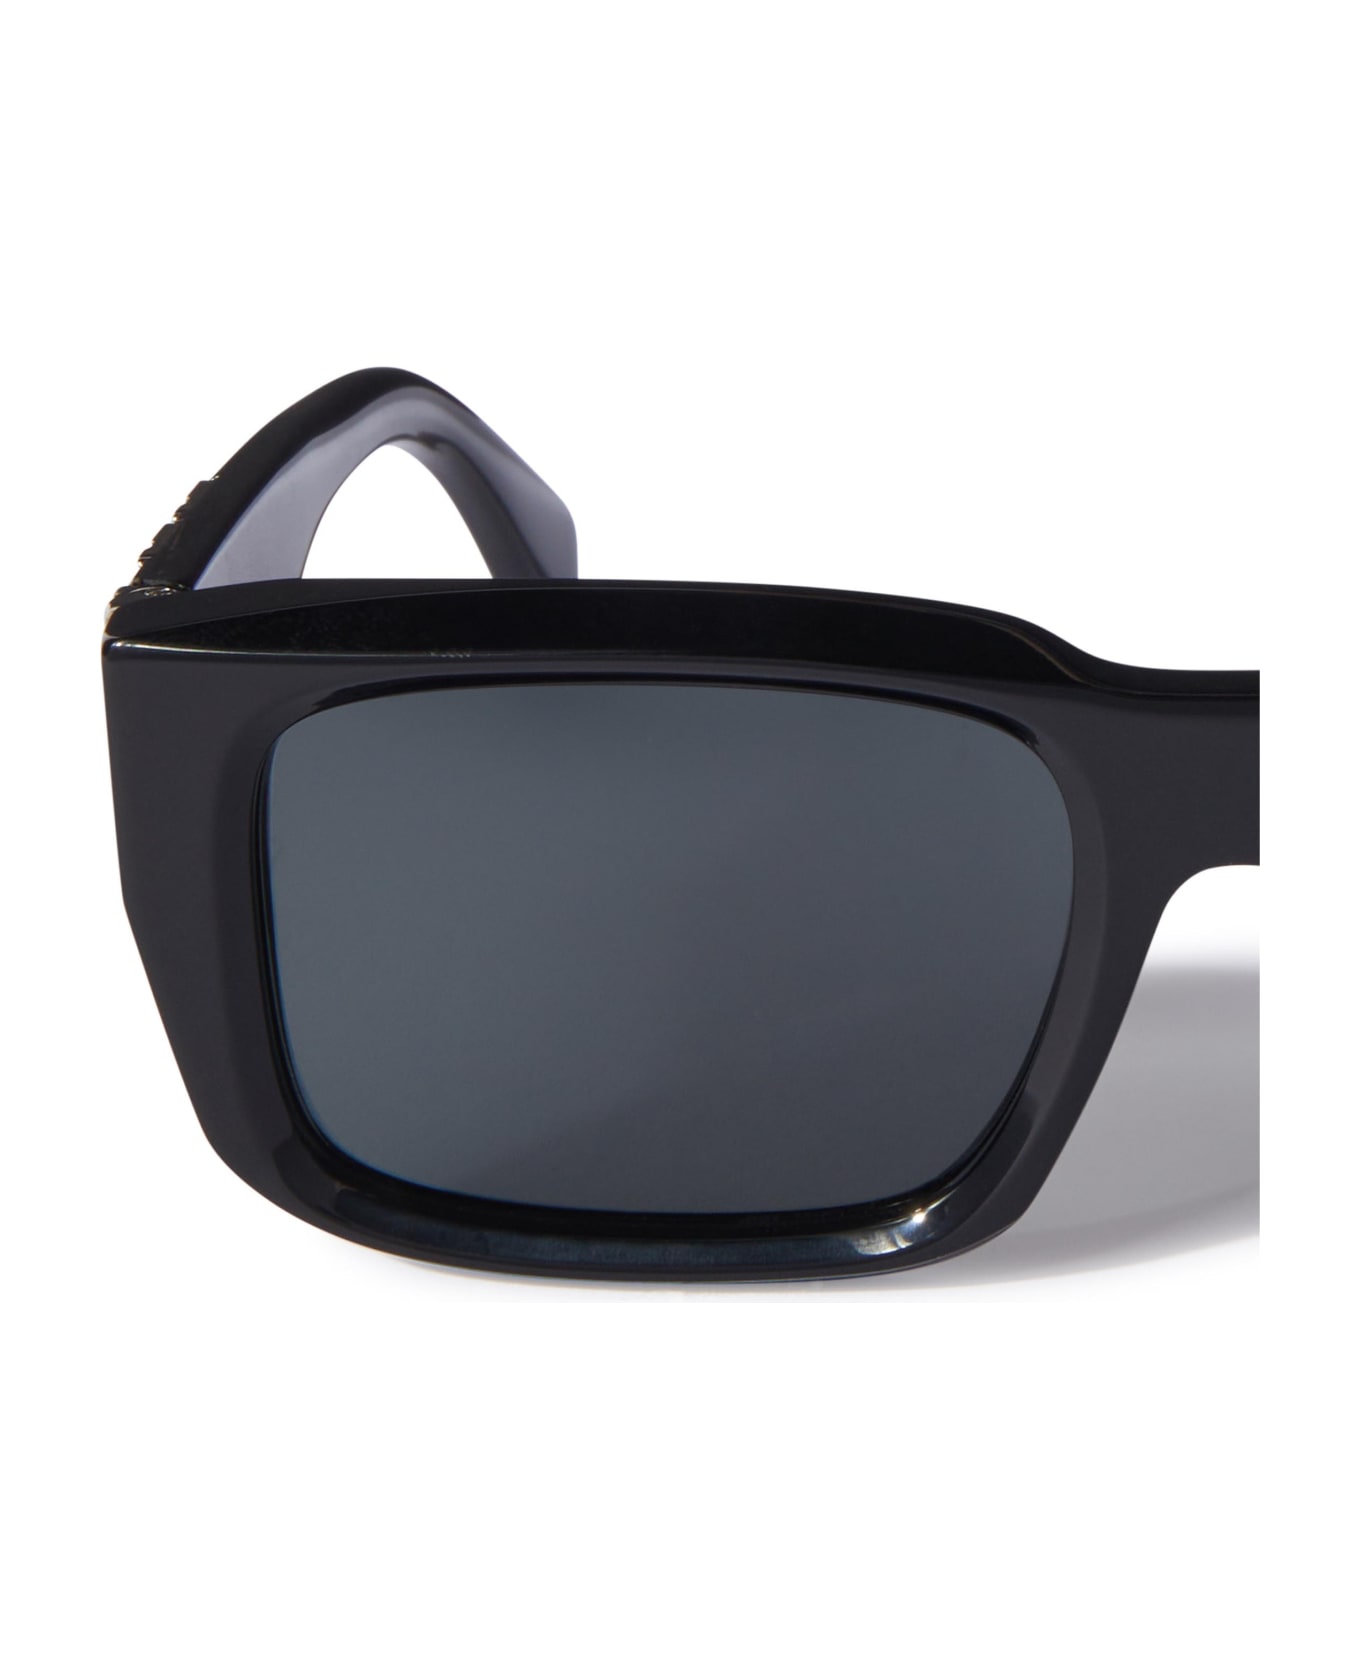 Off-White Sunglasses - Nero/Grigio サングラス